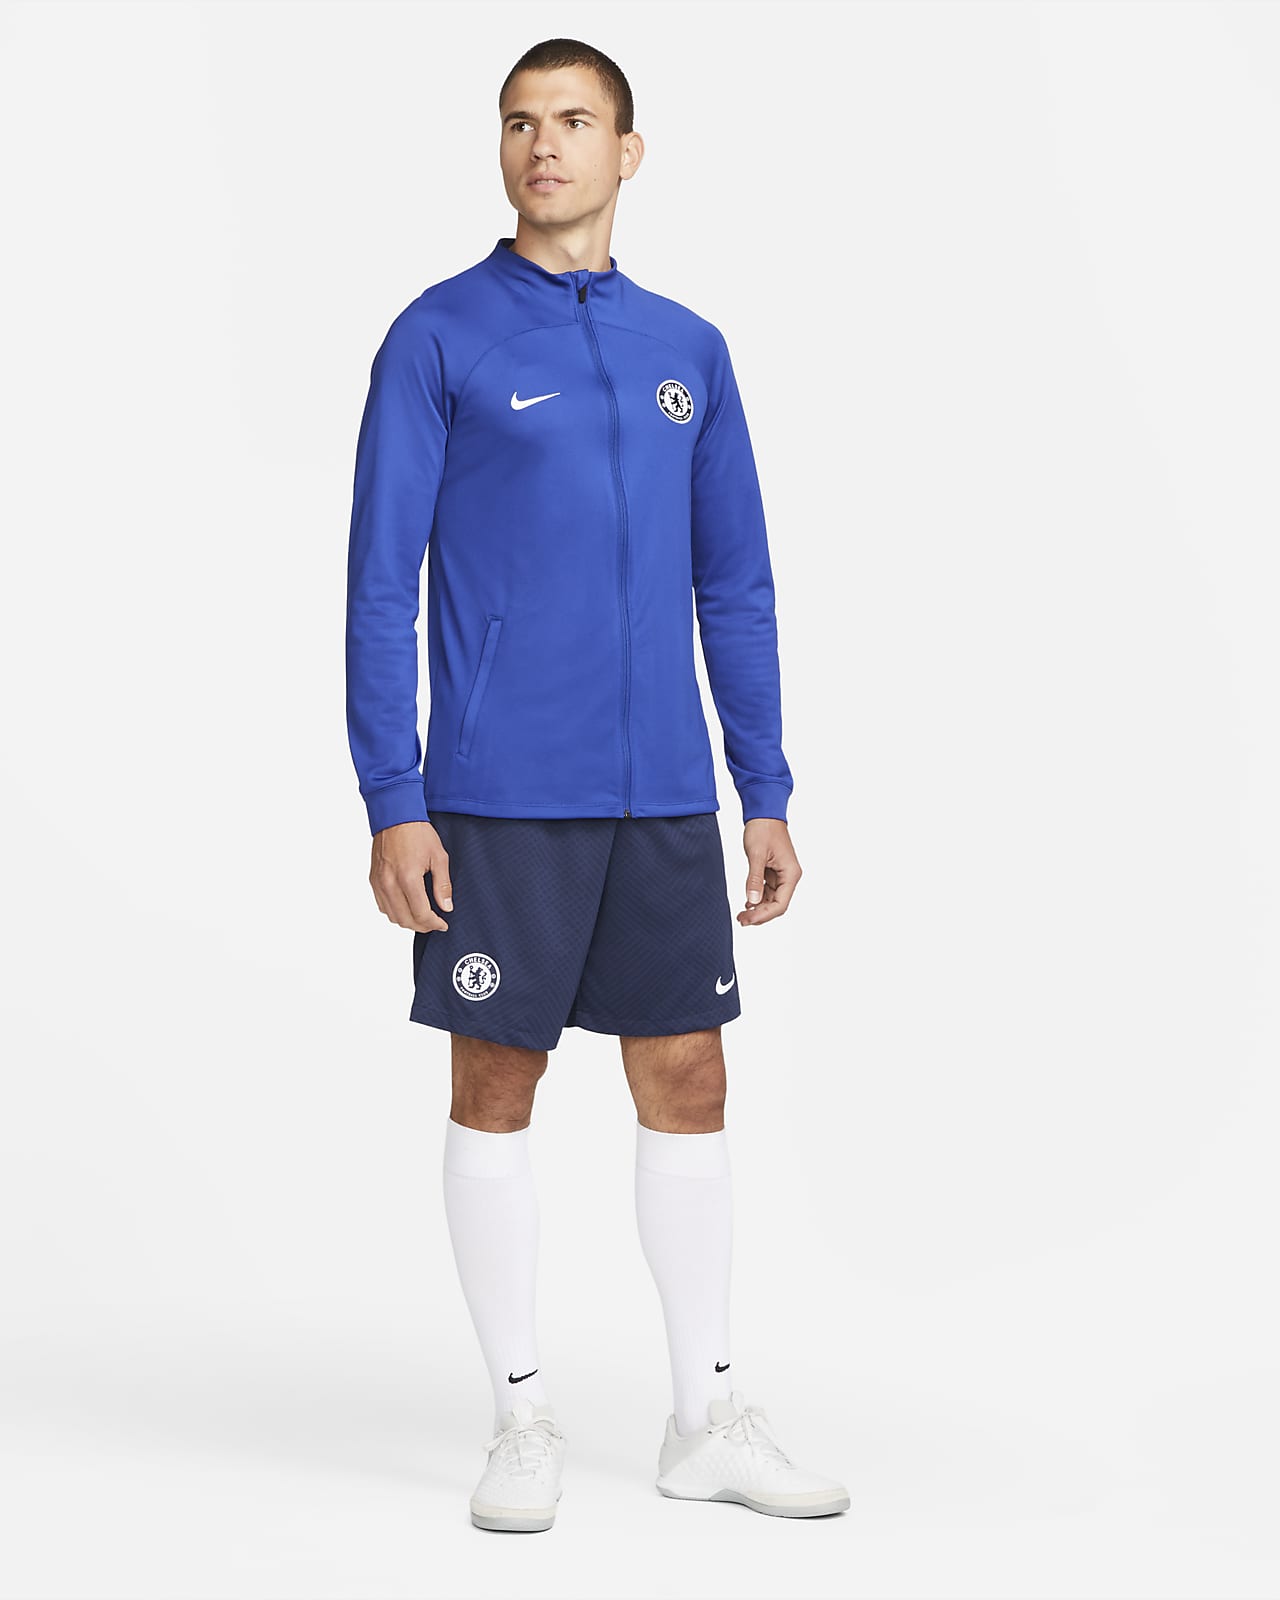 Chelsea FC Men's Dri-FIT Soccer Track Jacket.